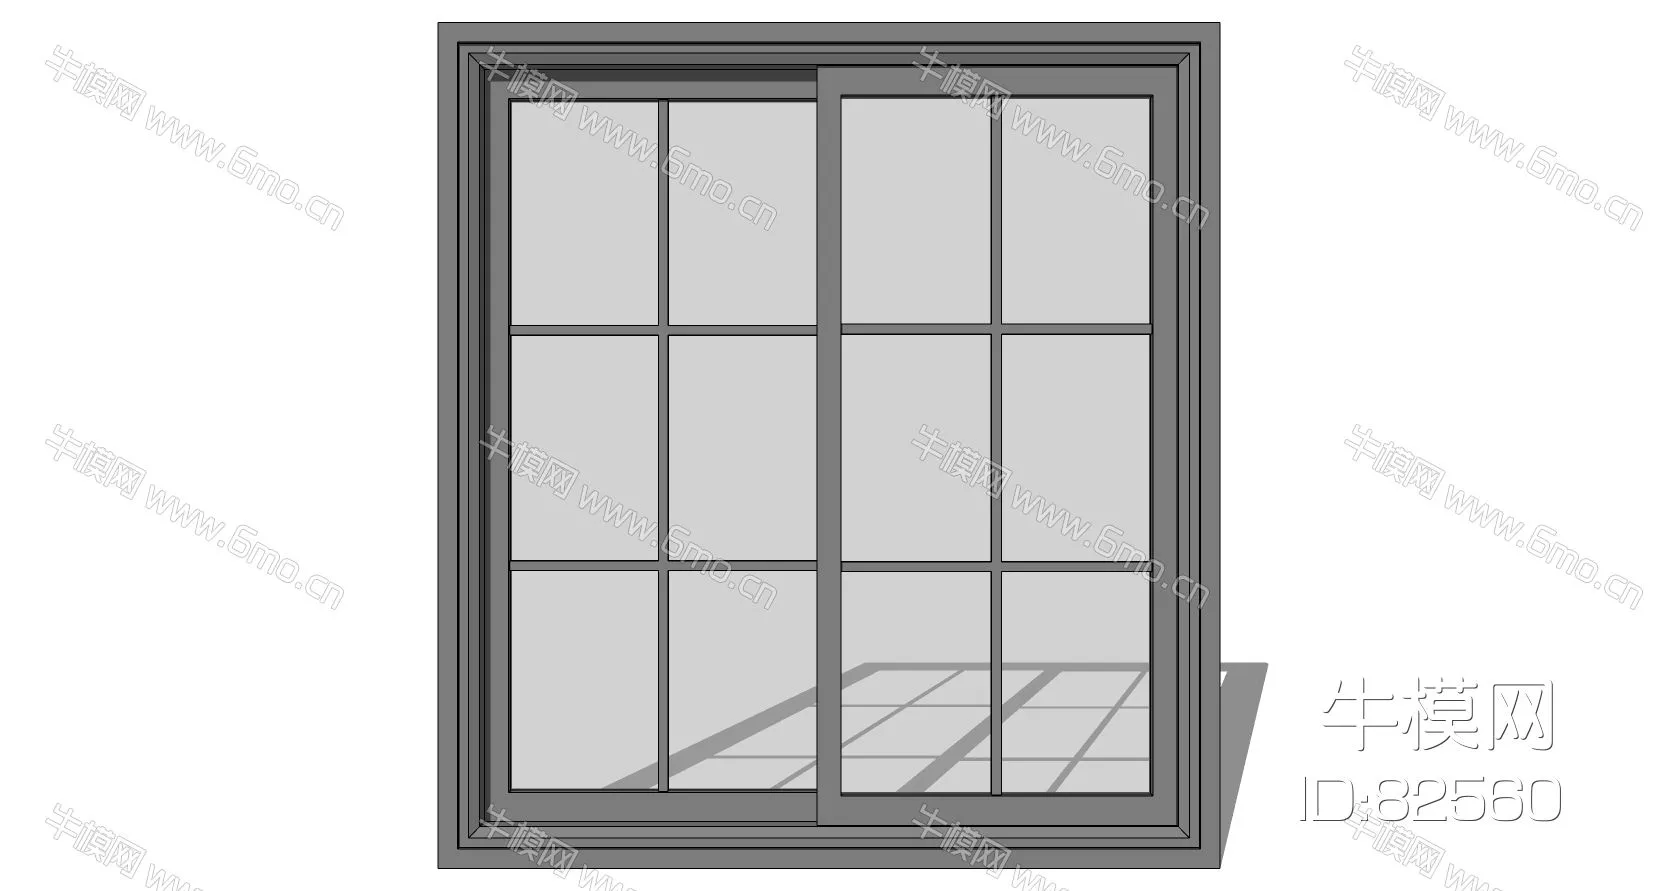 MODERN DOOR AND WINDOWS - SKETCHUP 3D MODEL - ENSCAPE - 82560